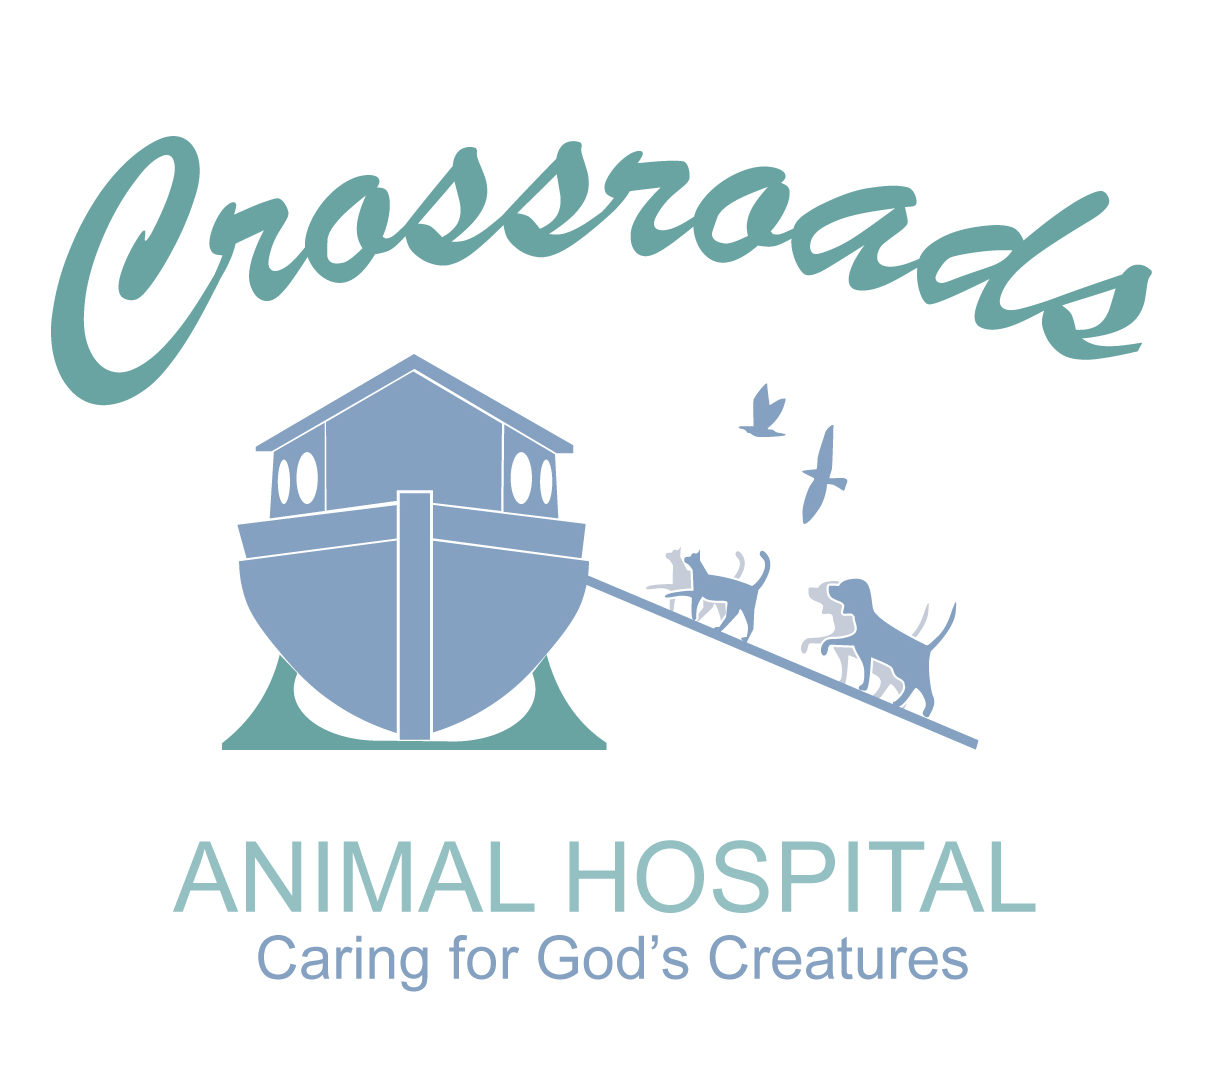 1209278 Crossroads Animal Hospital v1 102621 e1635870404495